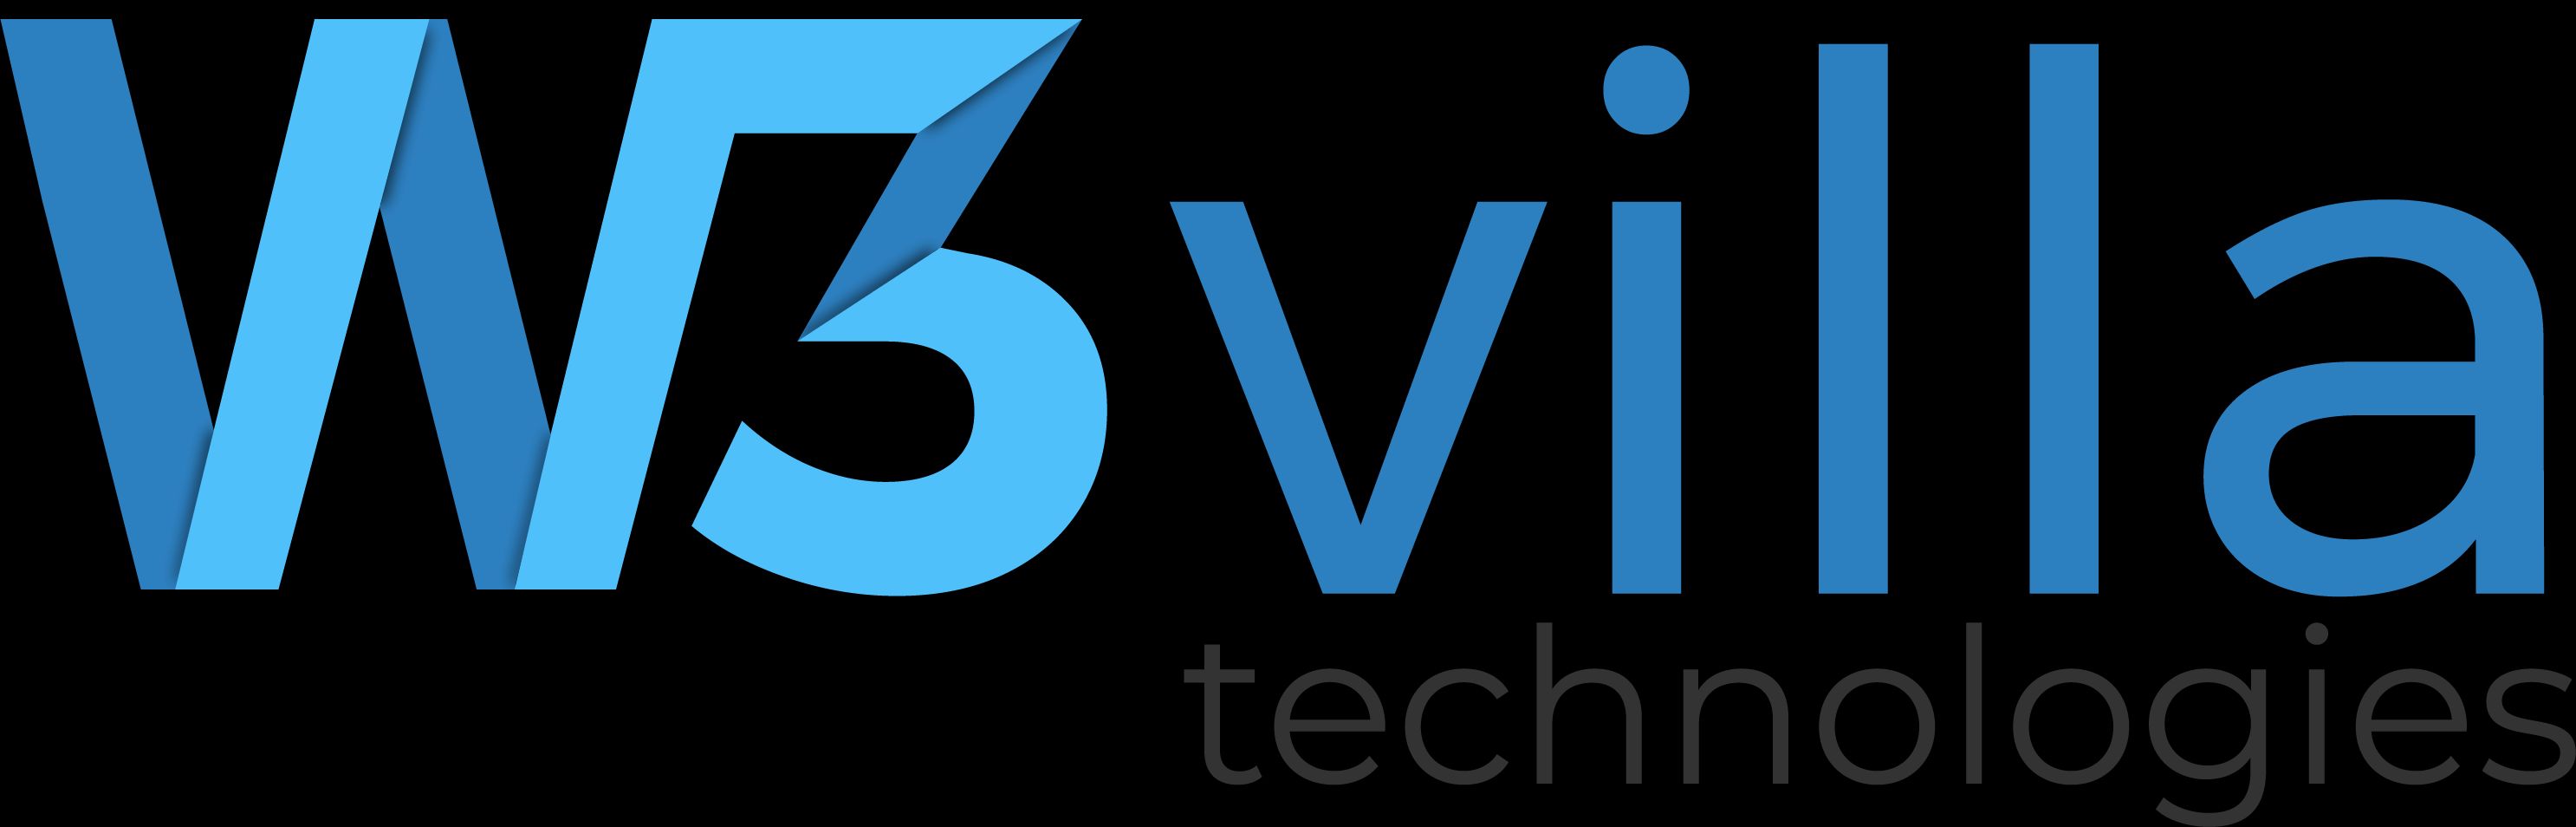 W3villa Technologies Inc